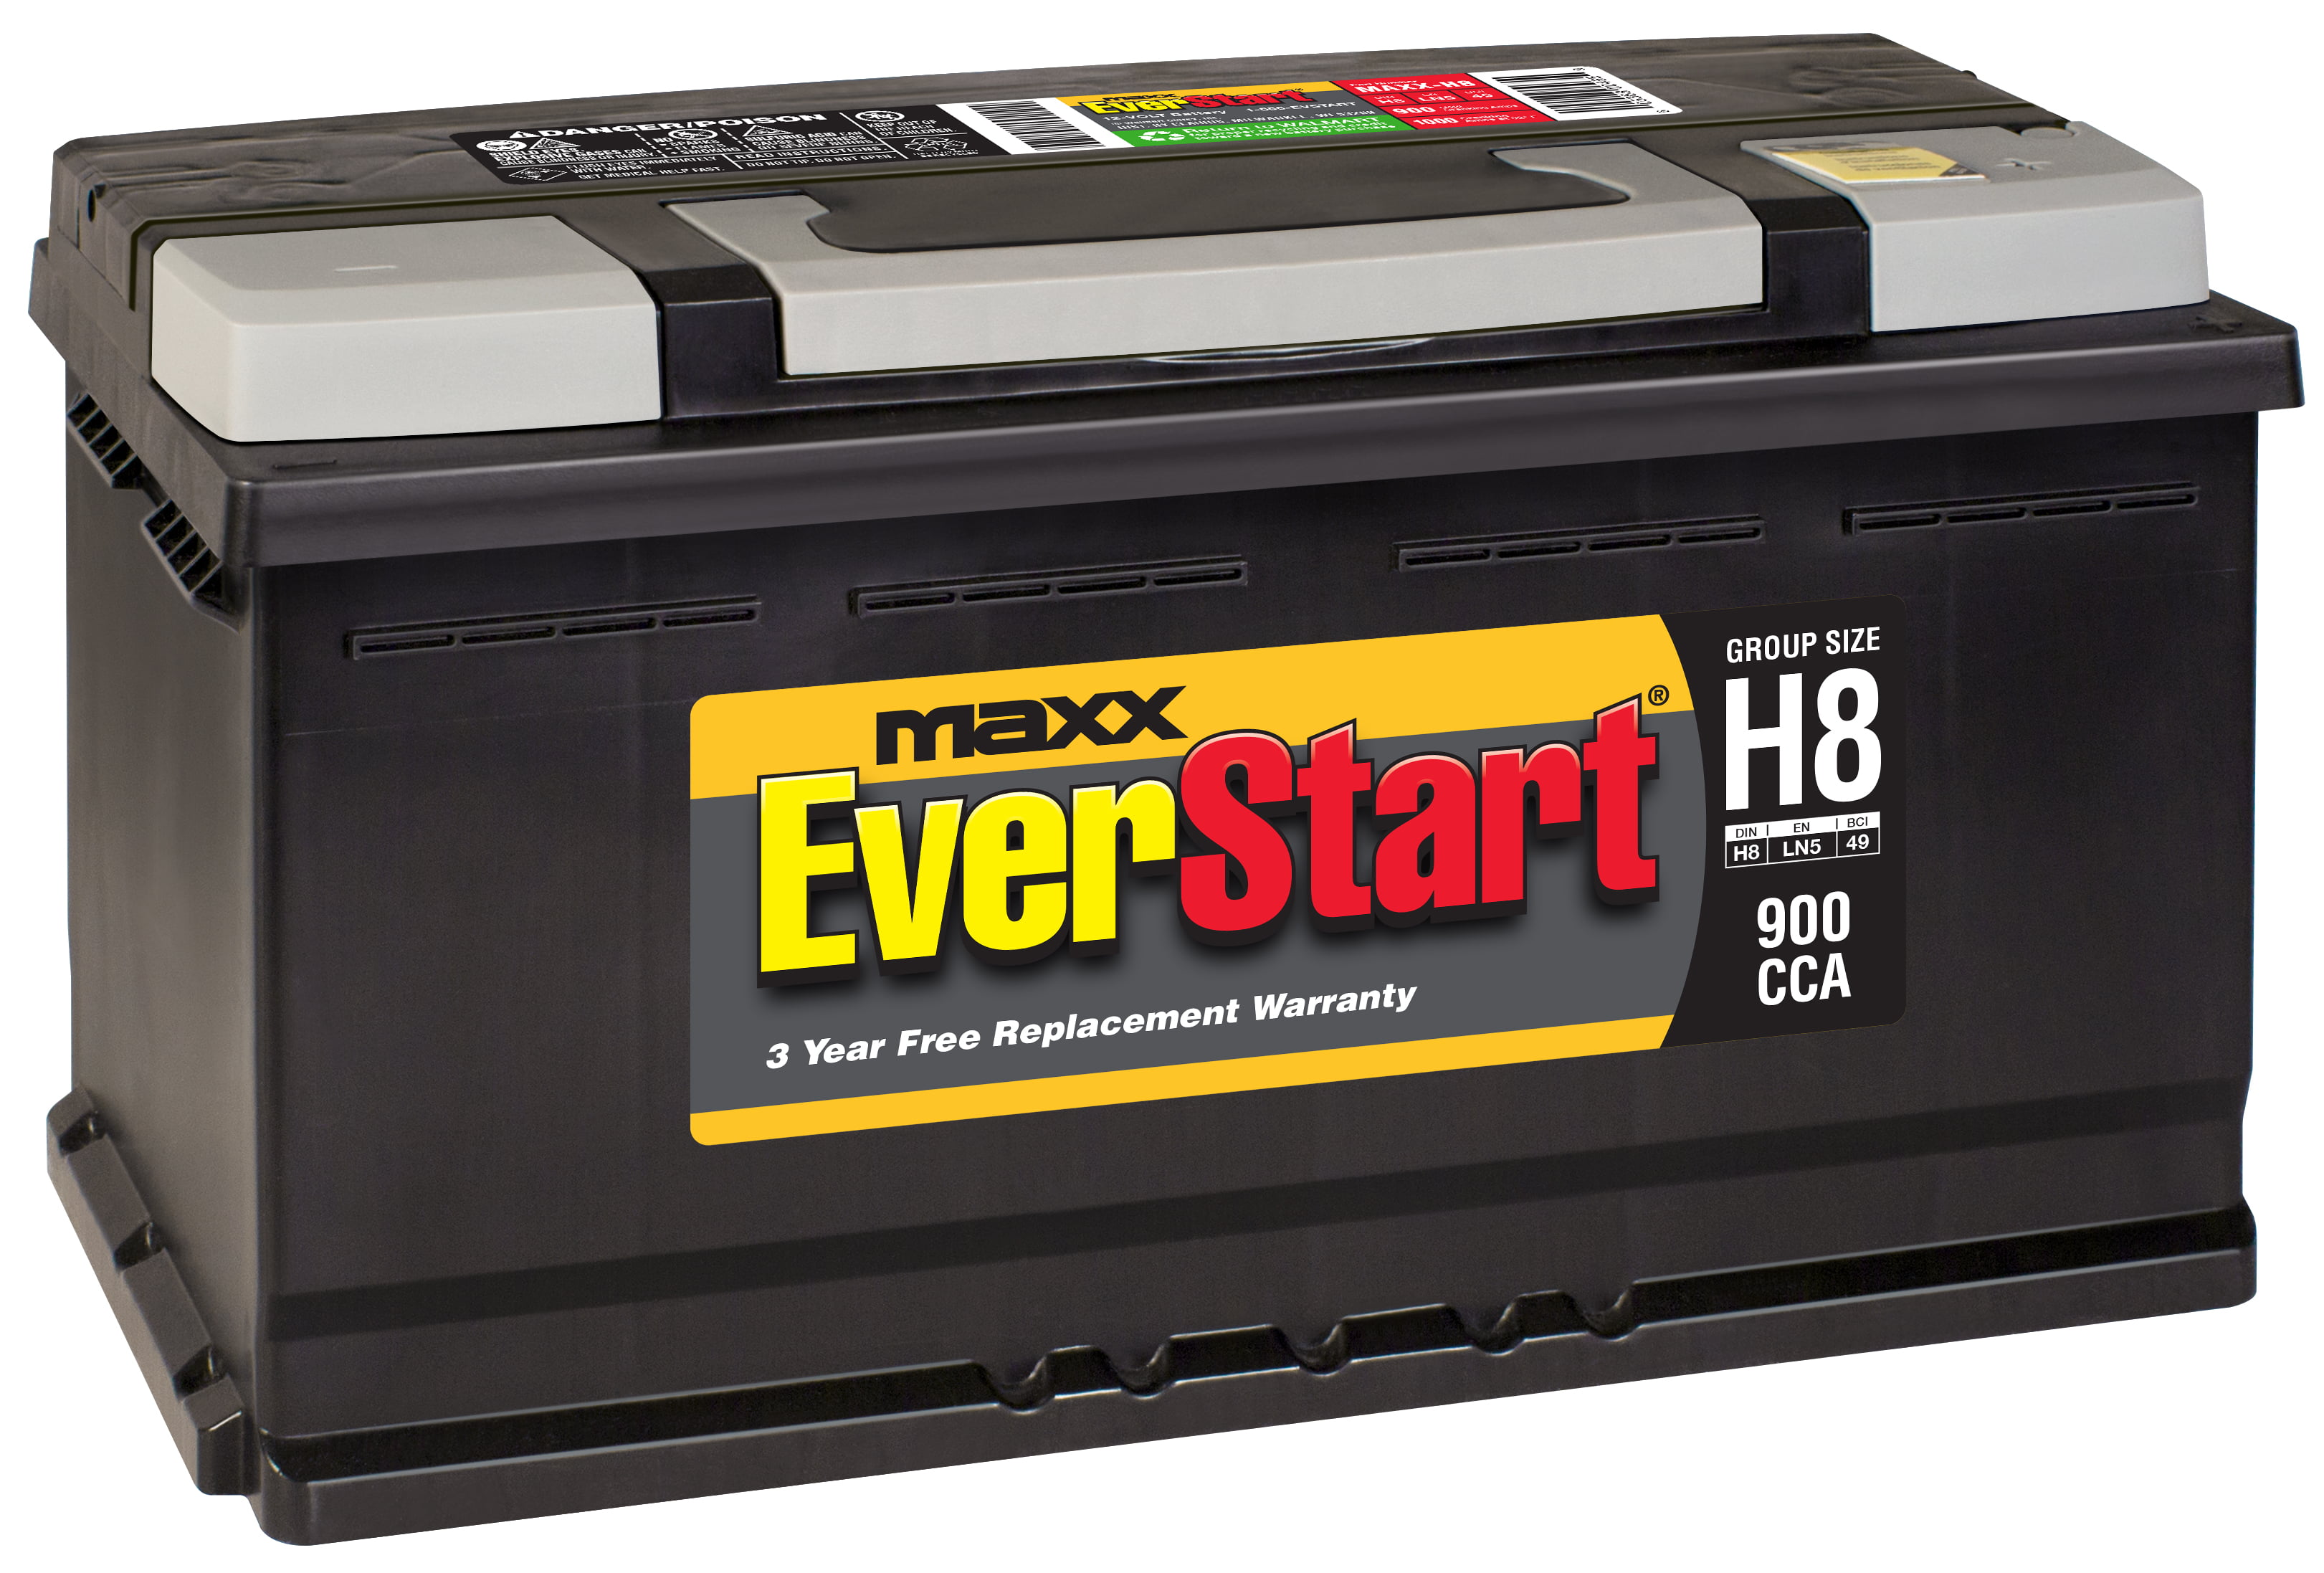 EverStart Maxx Lead Acid Automotive Battery, Group Size H8 (12 Volt/900